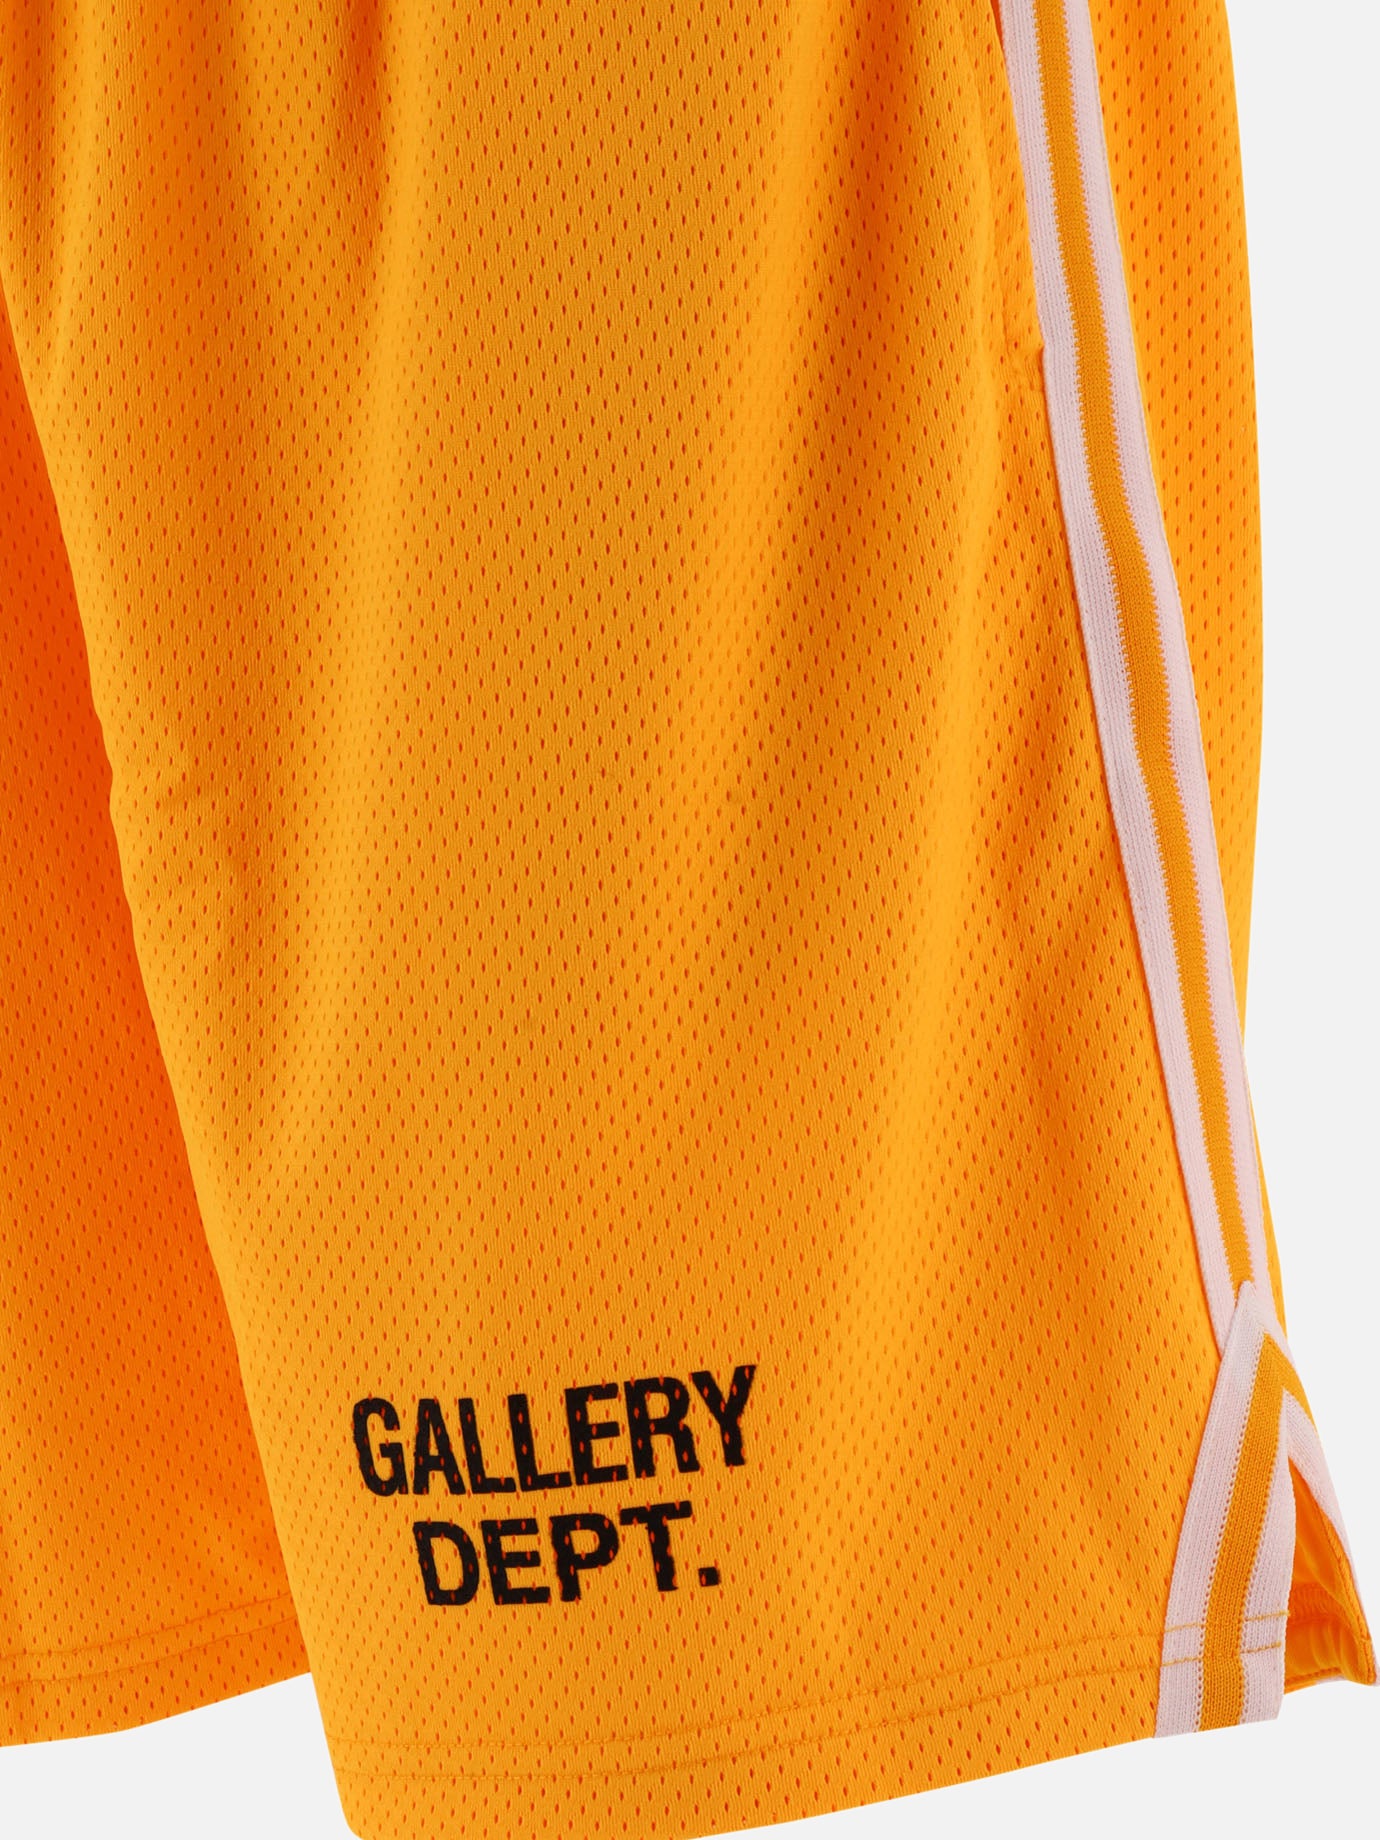 "Gallery Dept." shorts